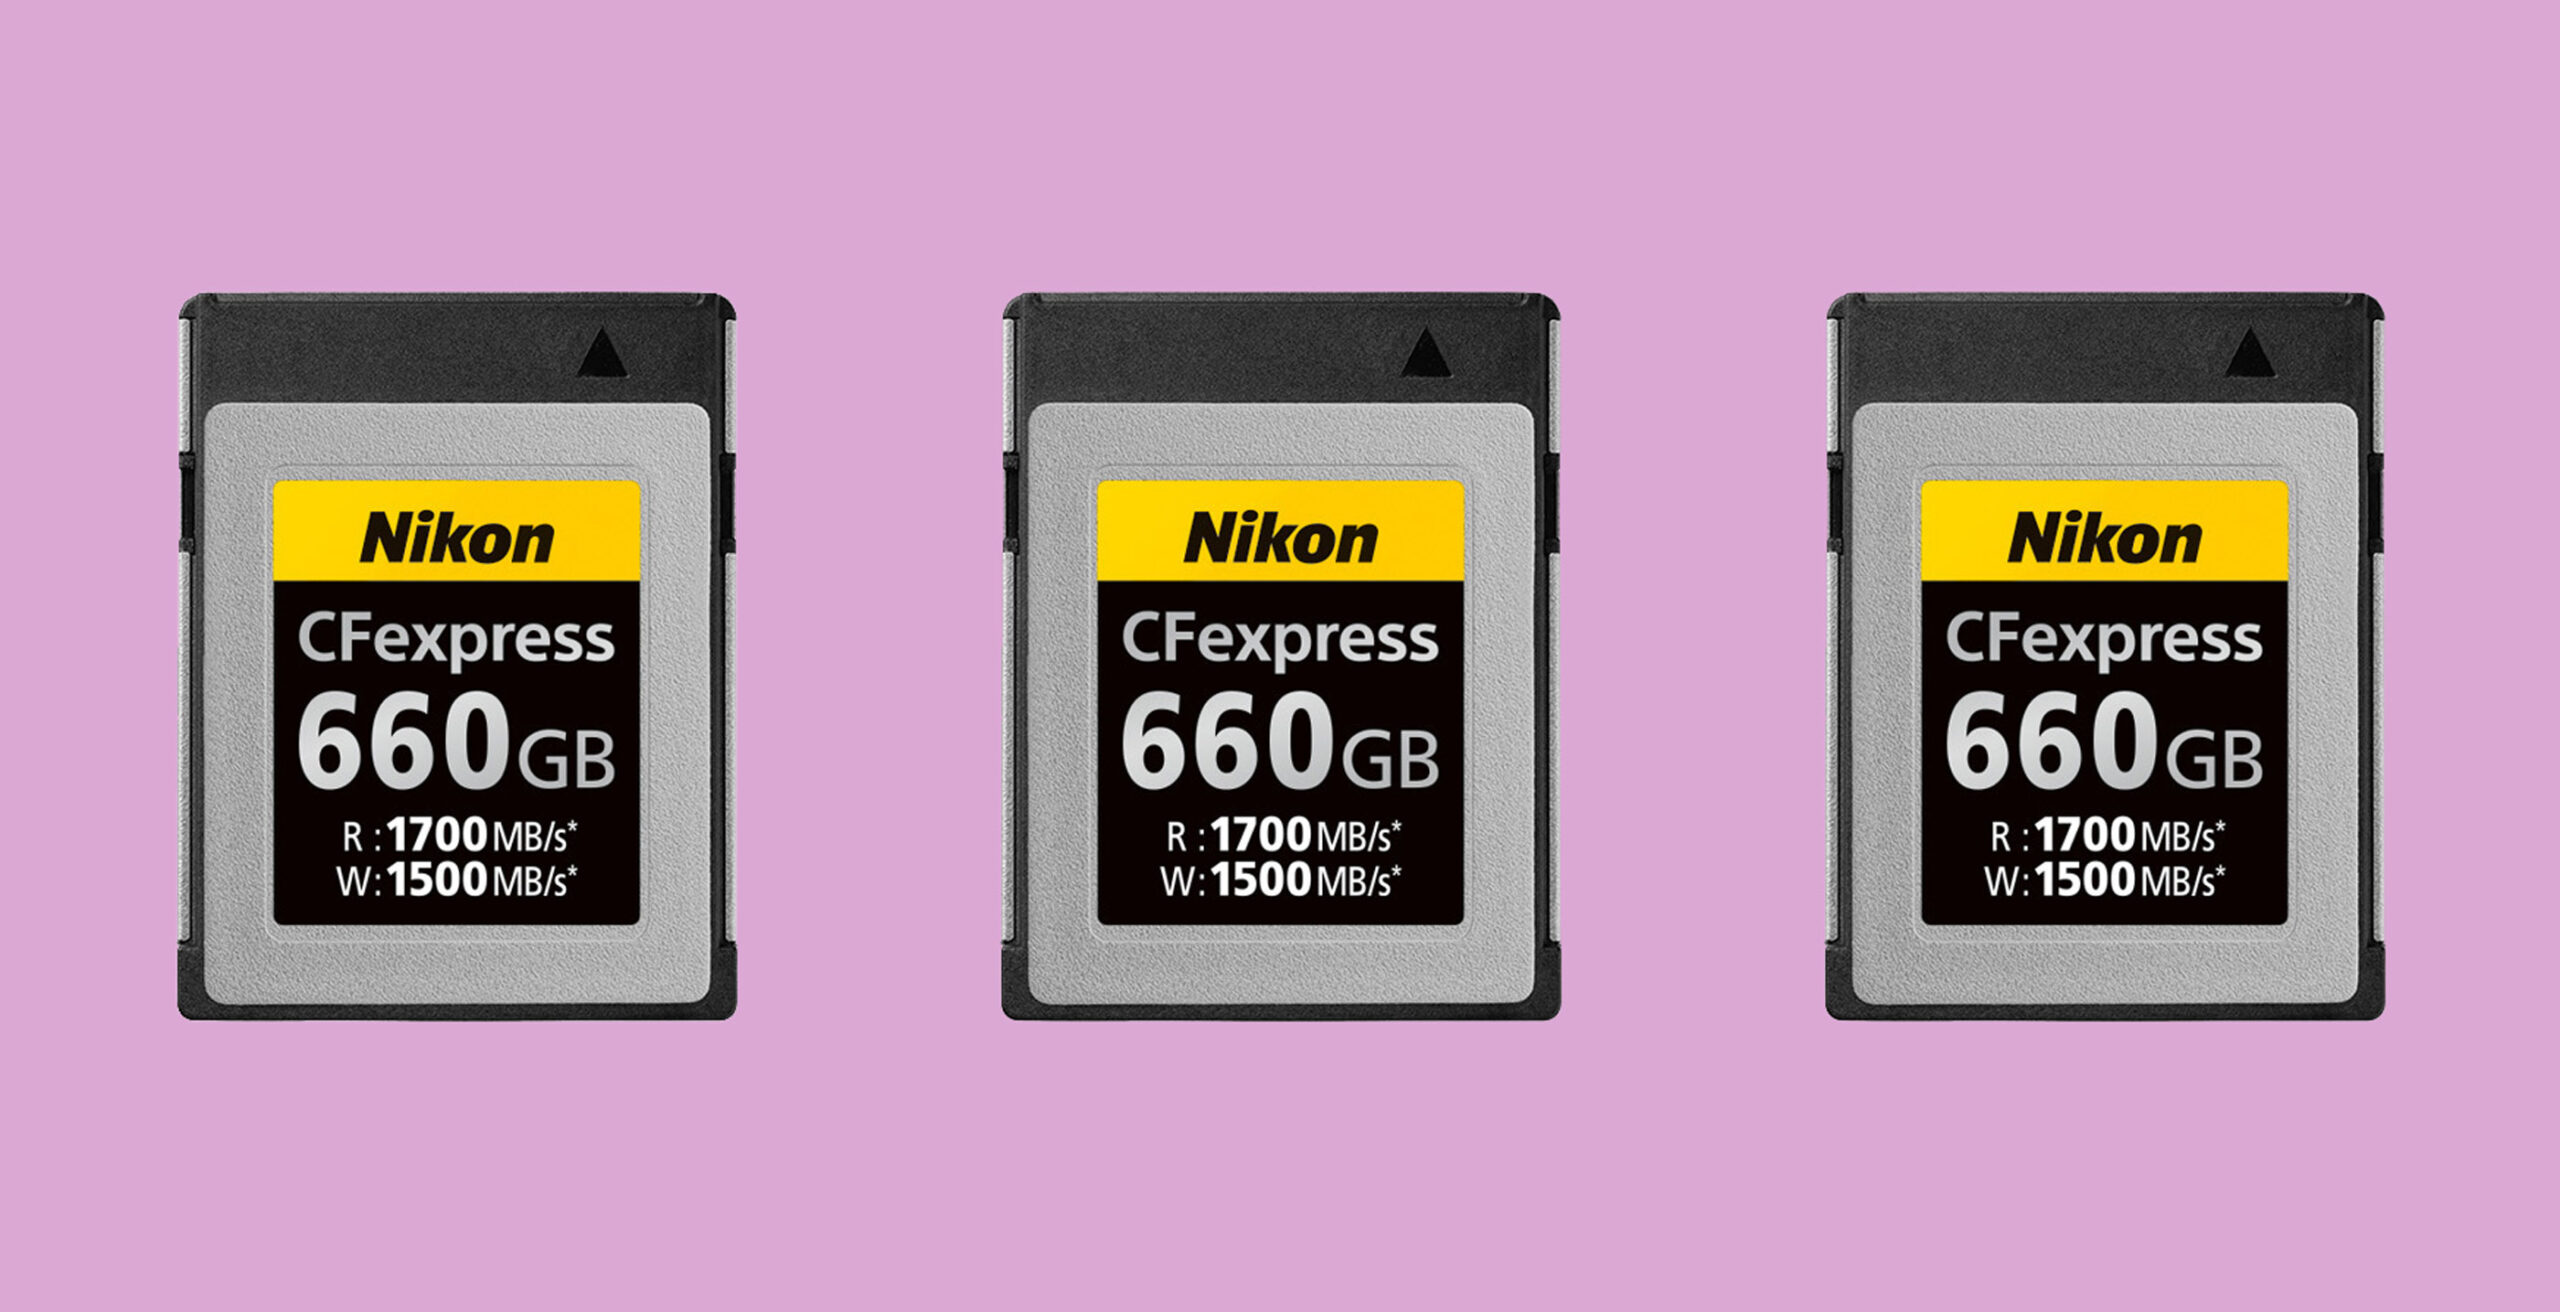 Nikon's CFexpress card hits shelves this summer | Popular Photography